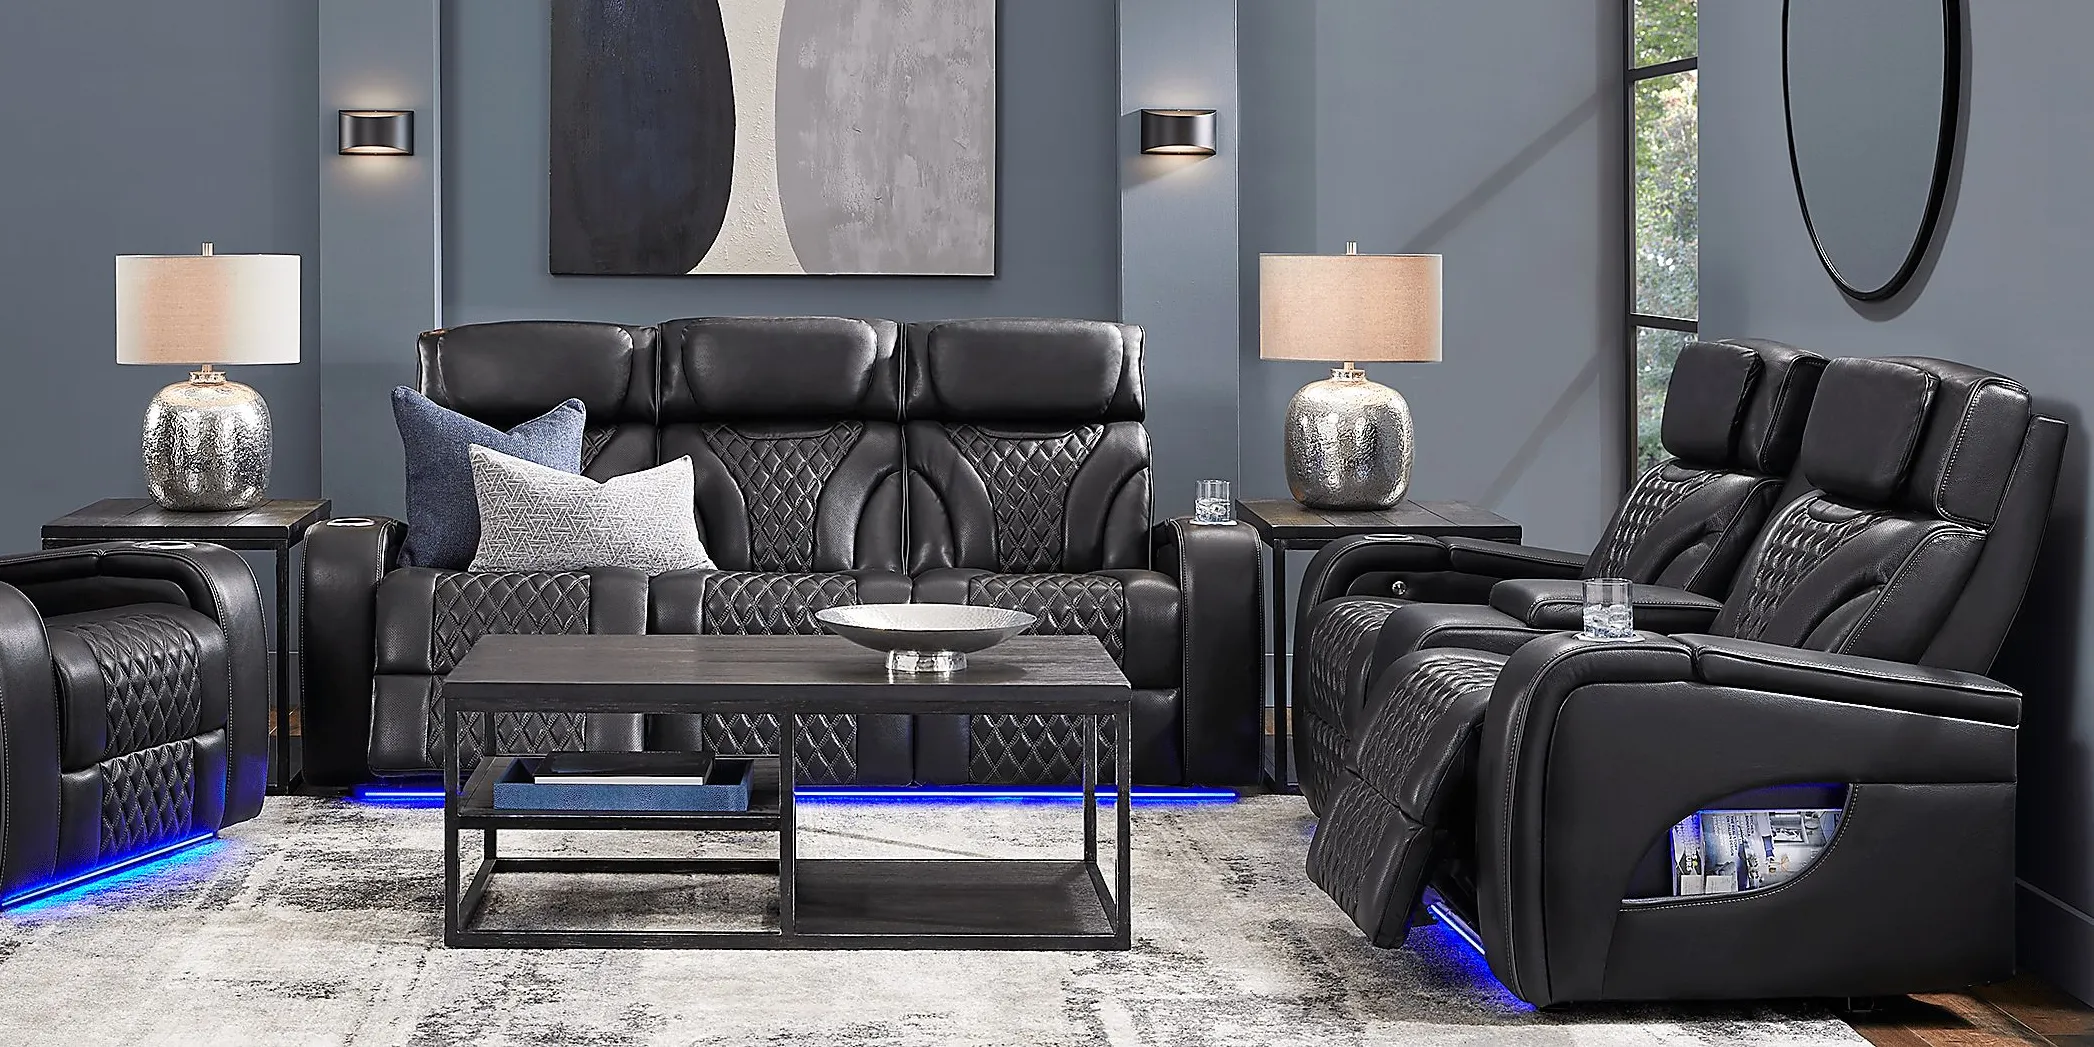 Horizon Ridge Black Leather 8 Pc Triple Power Reclining Living Room with Massage and Heat